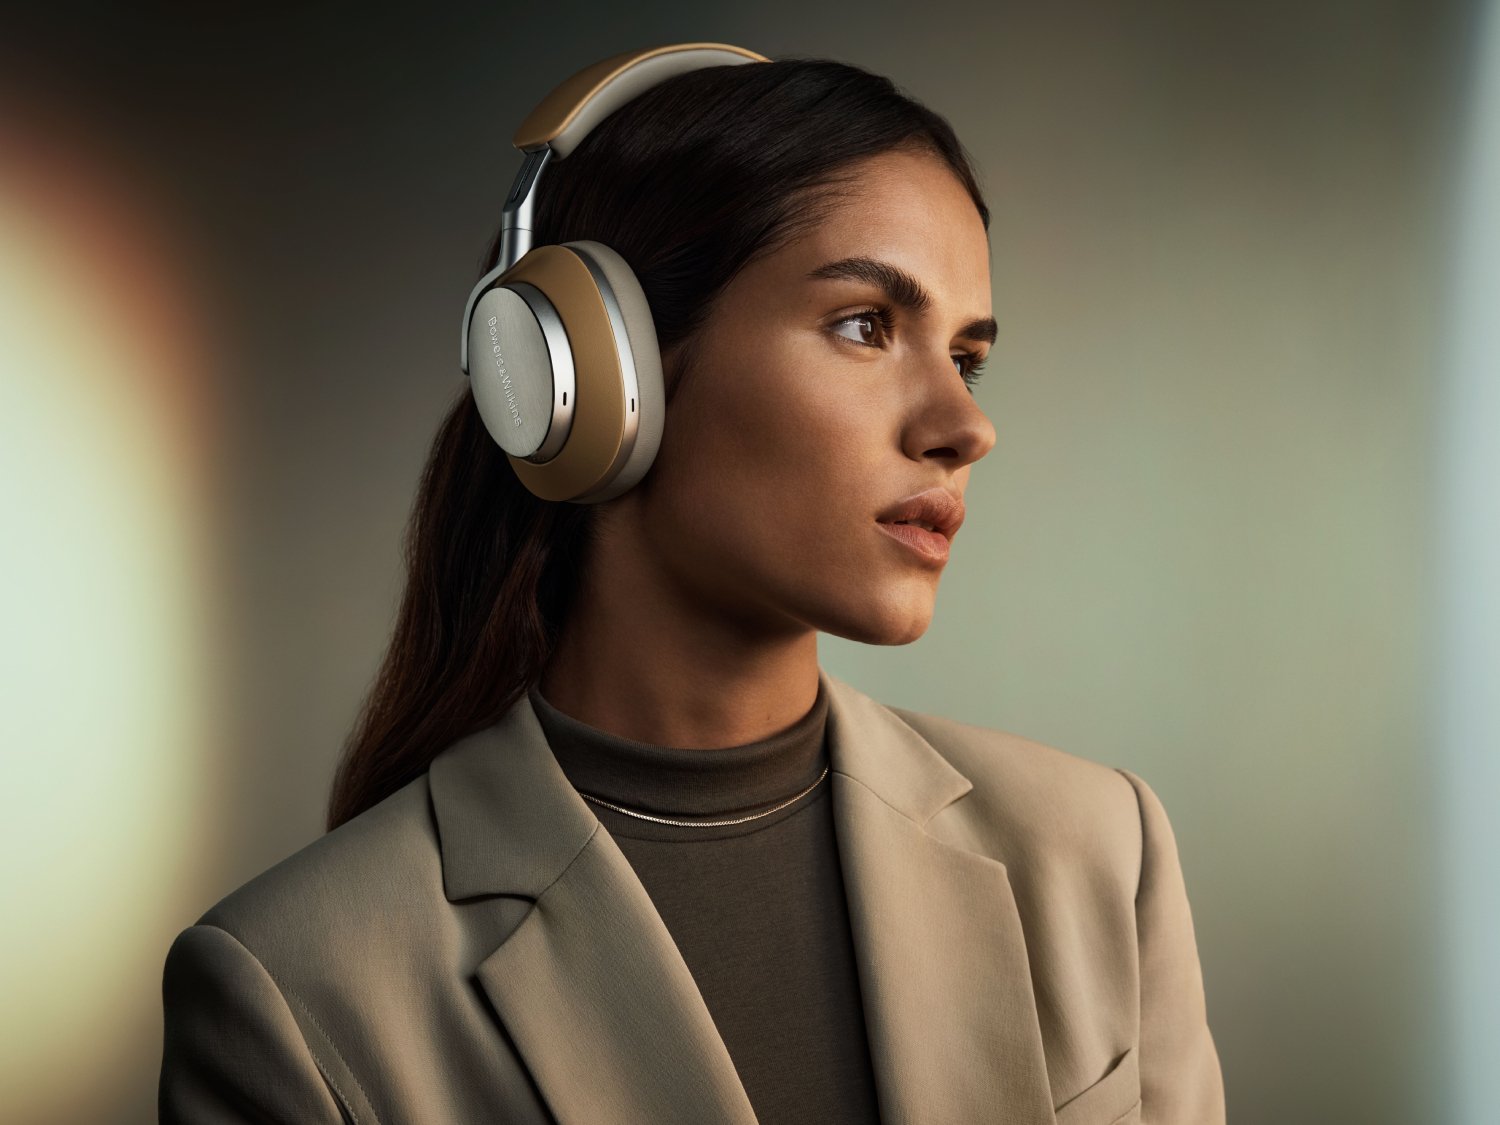  Bowers & Wilkins Px8 Over-Ear Wireless Headphones